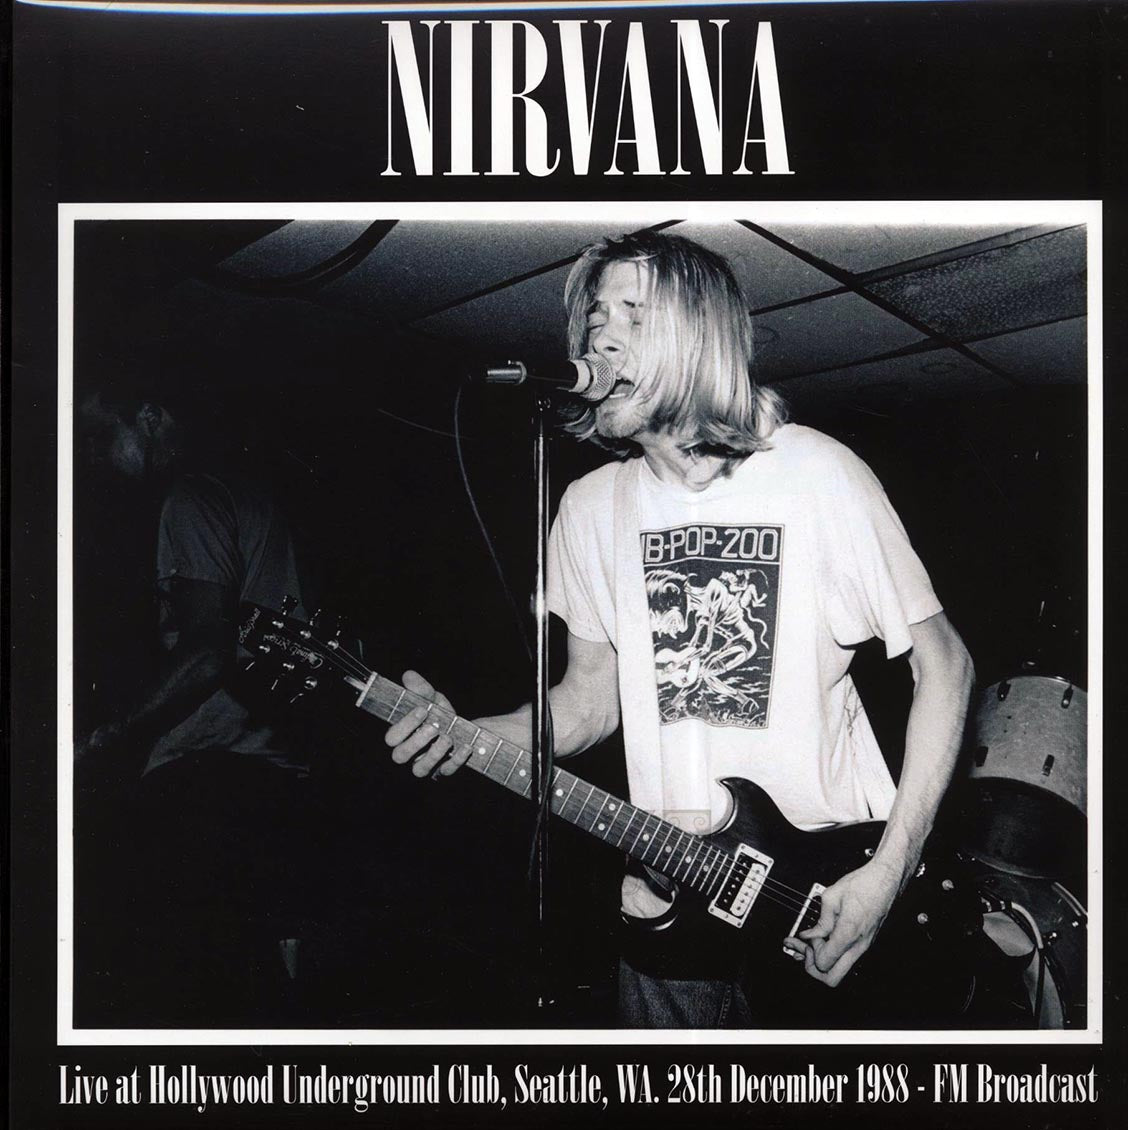 Nirvana - Live At Hollywood Underground Club, Seattle, WA, 28th December 1988 FM Broadcast (ltd. 500 copies made) - Vinyl LP